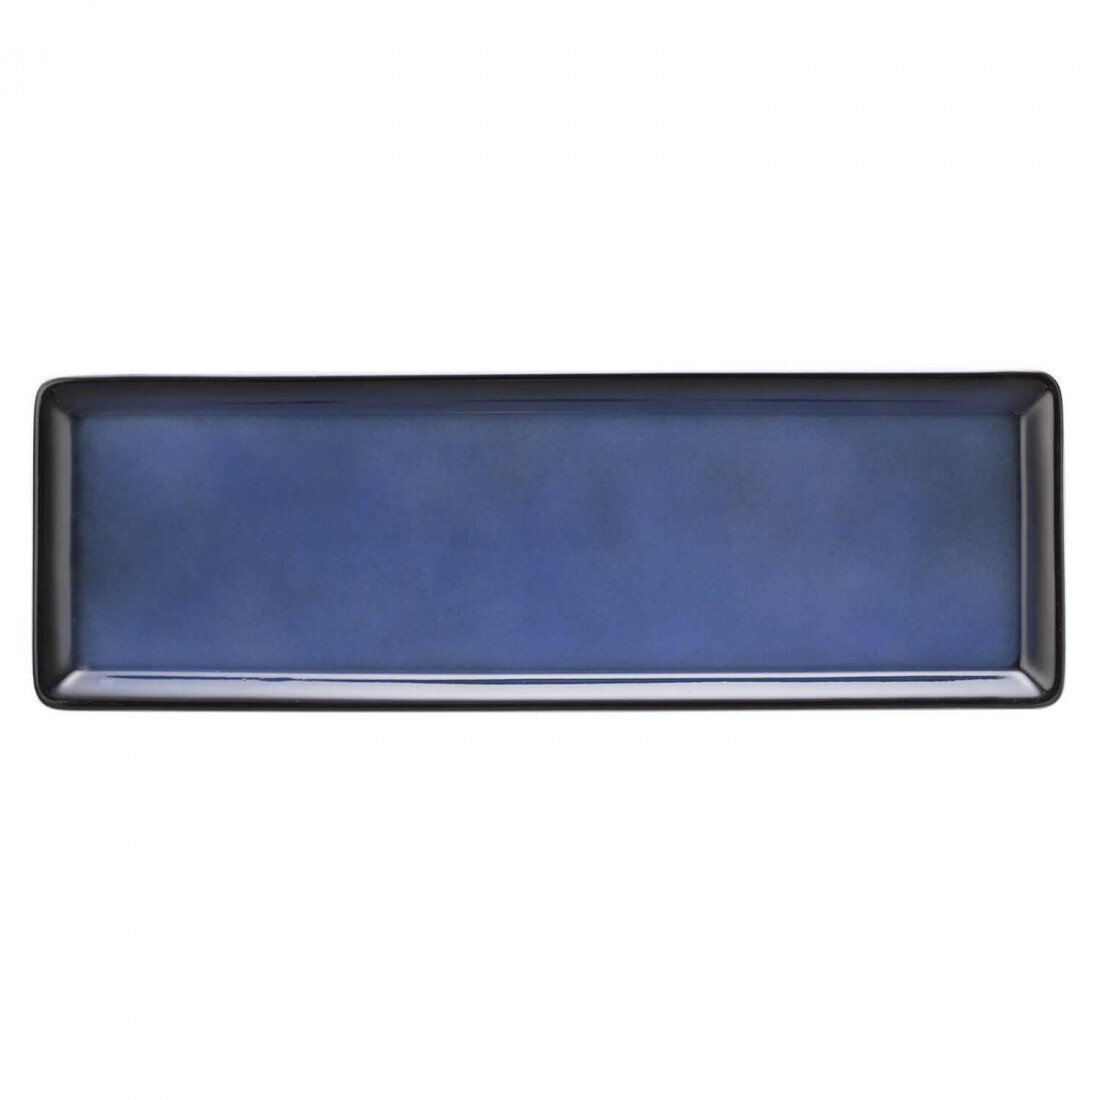 Seltmann - Buffet Gourmet - Piatto 5170 32,5x10,8 cm Royal Blu